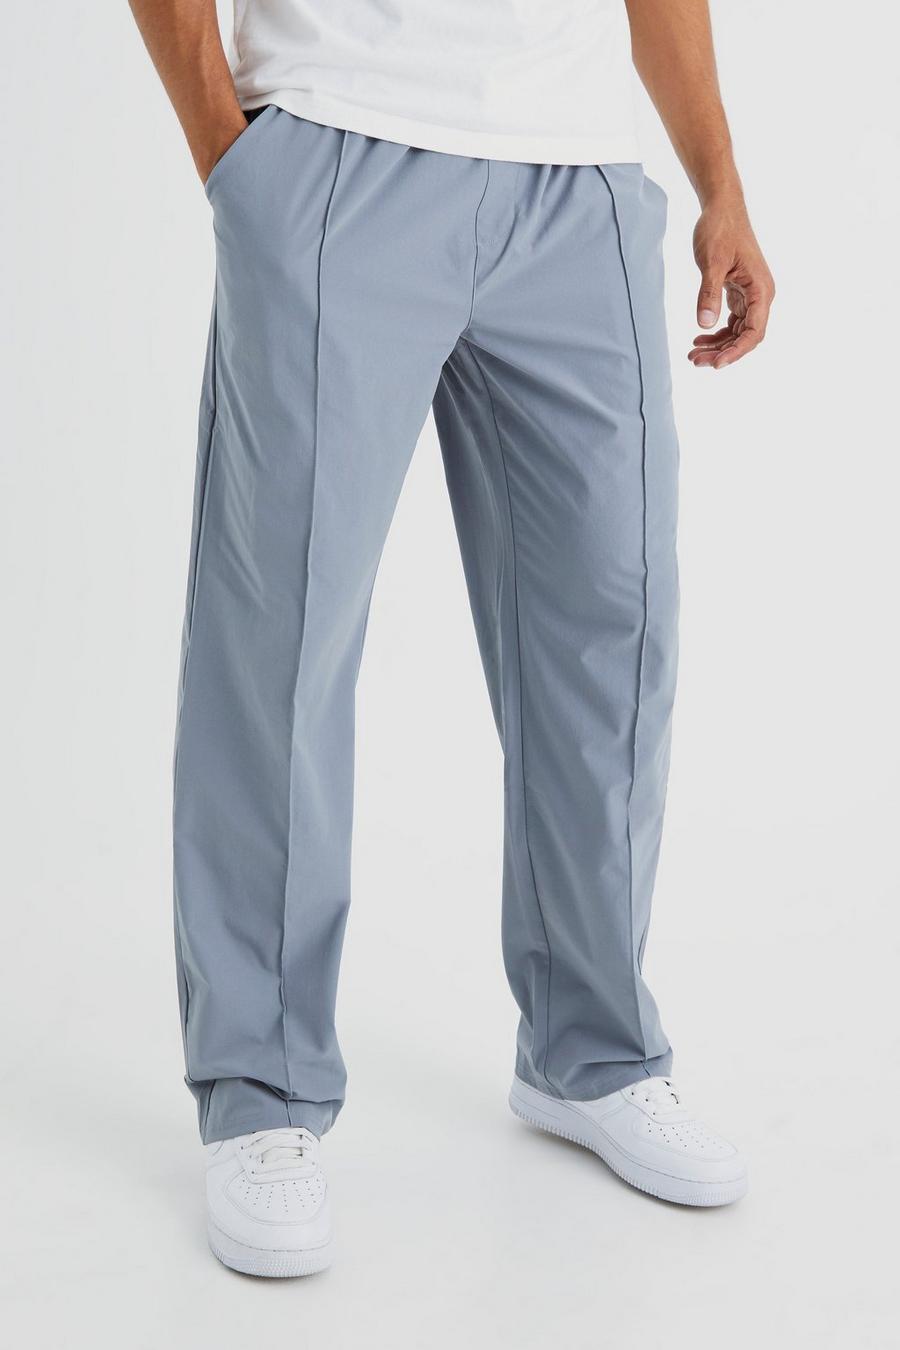 Pantalón elástico ligero holgado con alforza, Light grey